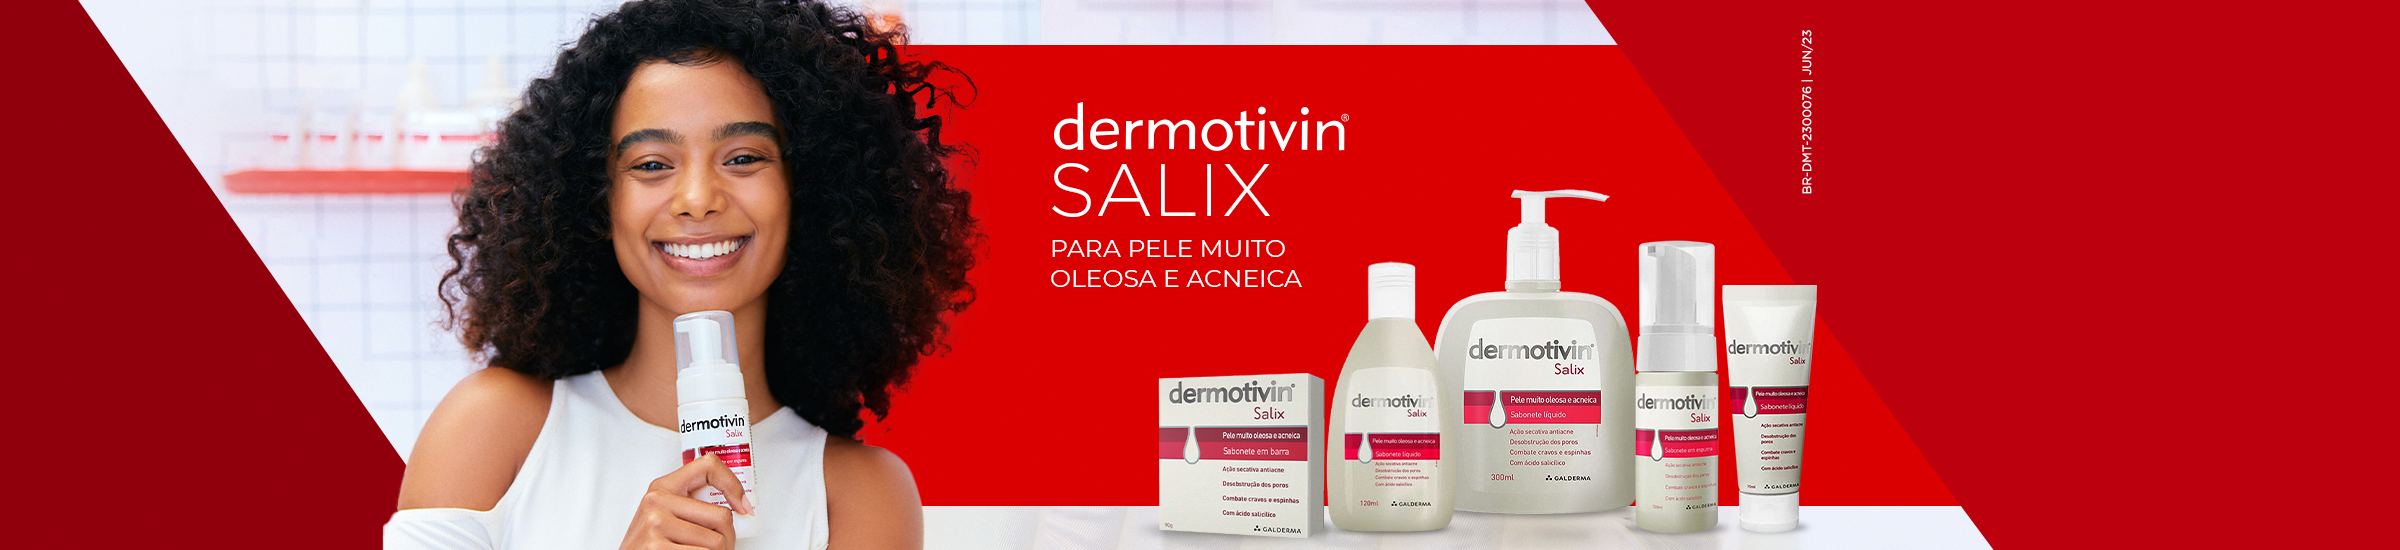 Dermotivin Salix para pele acneica